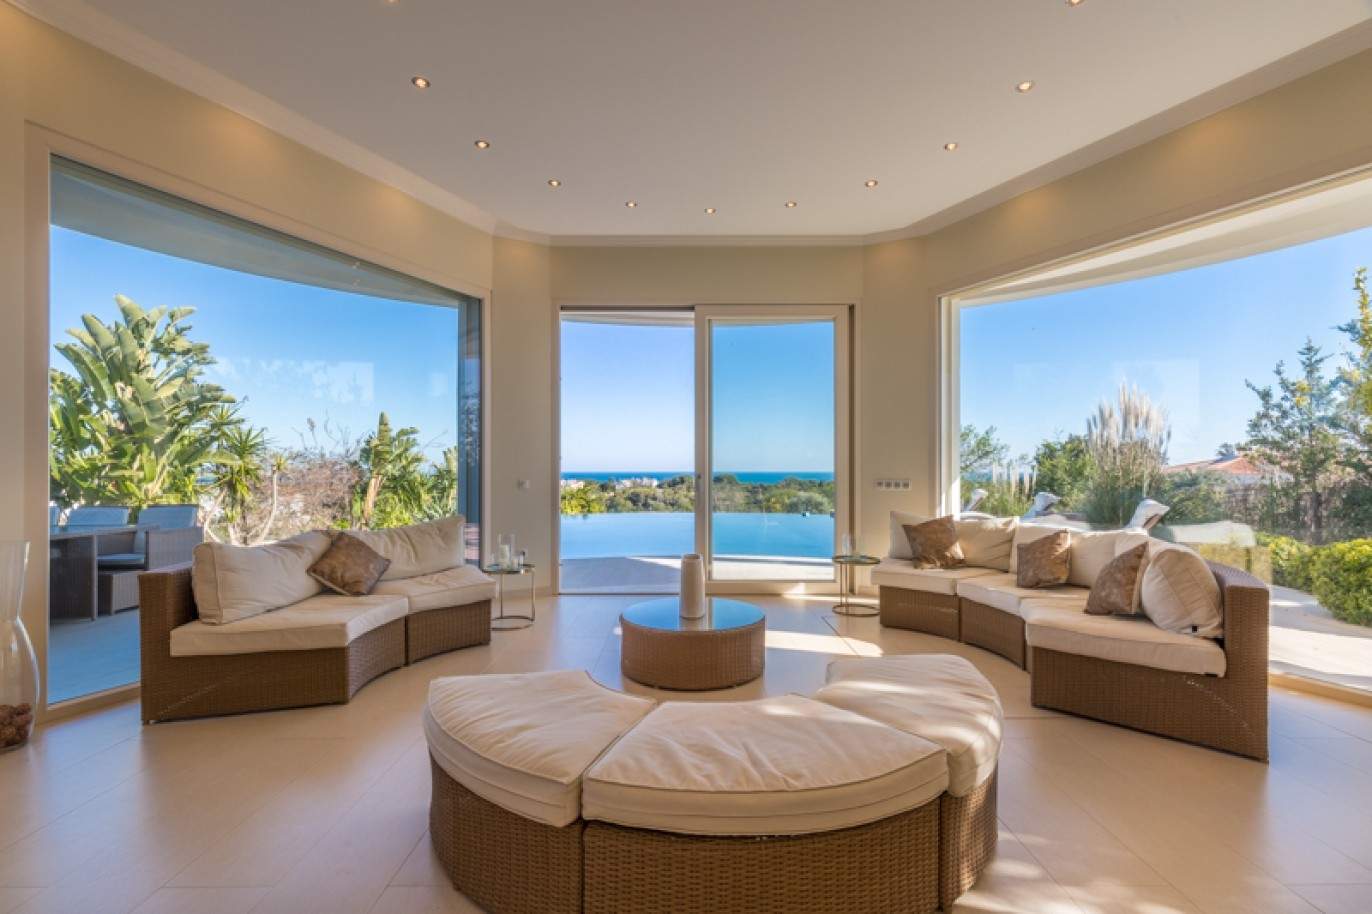 Villa for sale, with sea view, near beach and golf, Algarve, Portugal_76407